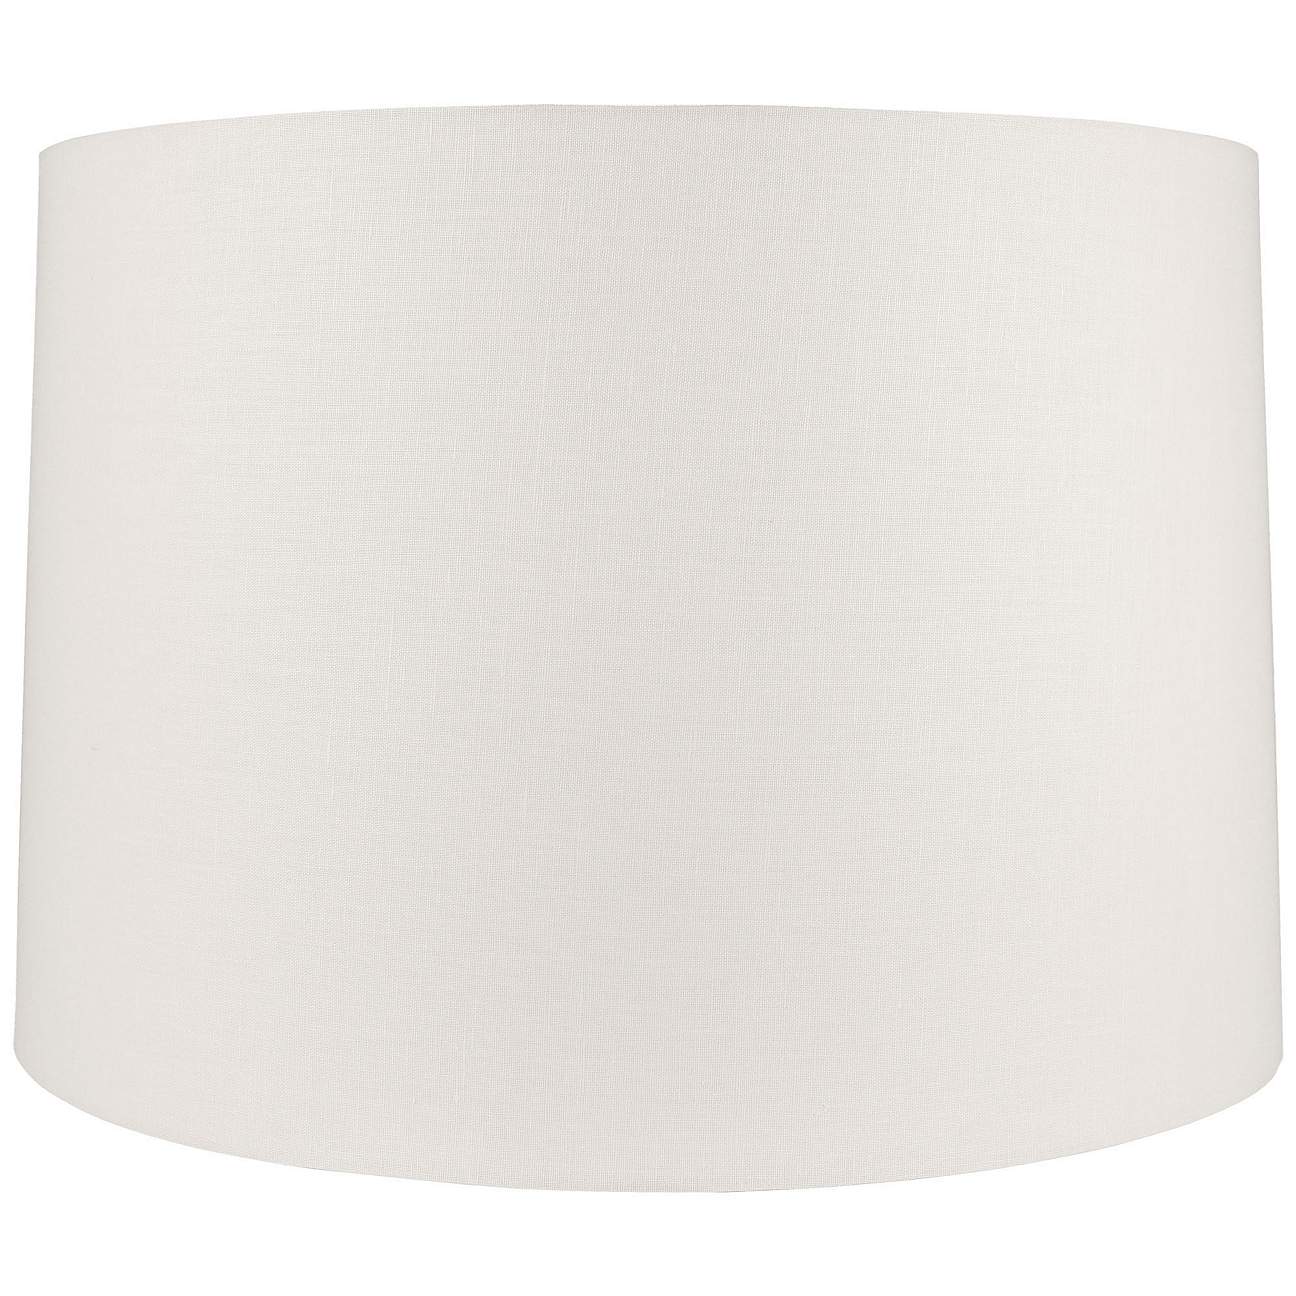 Off-White Linen Round Drum Shade 18x19x12.5 (Spider) - #8M208 | Lamps Plus